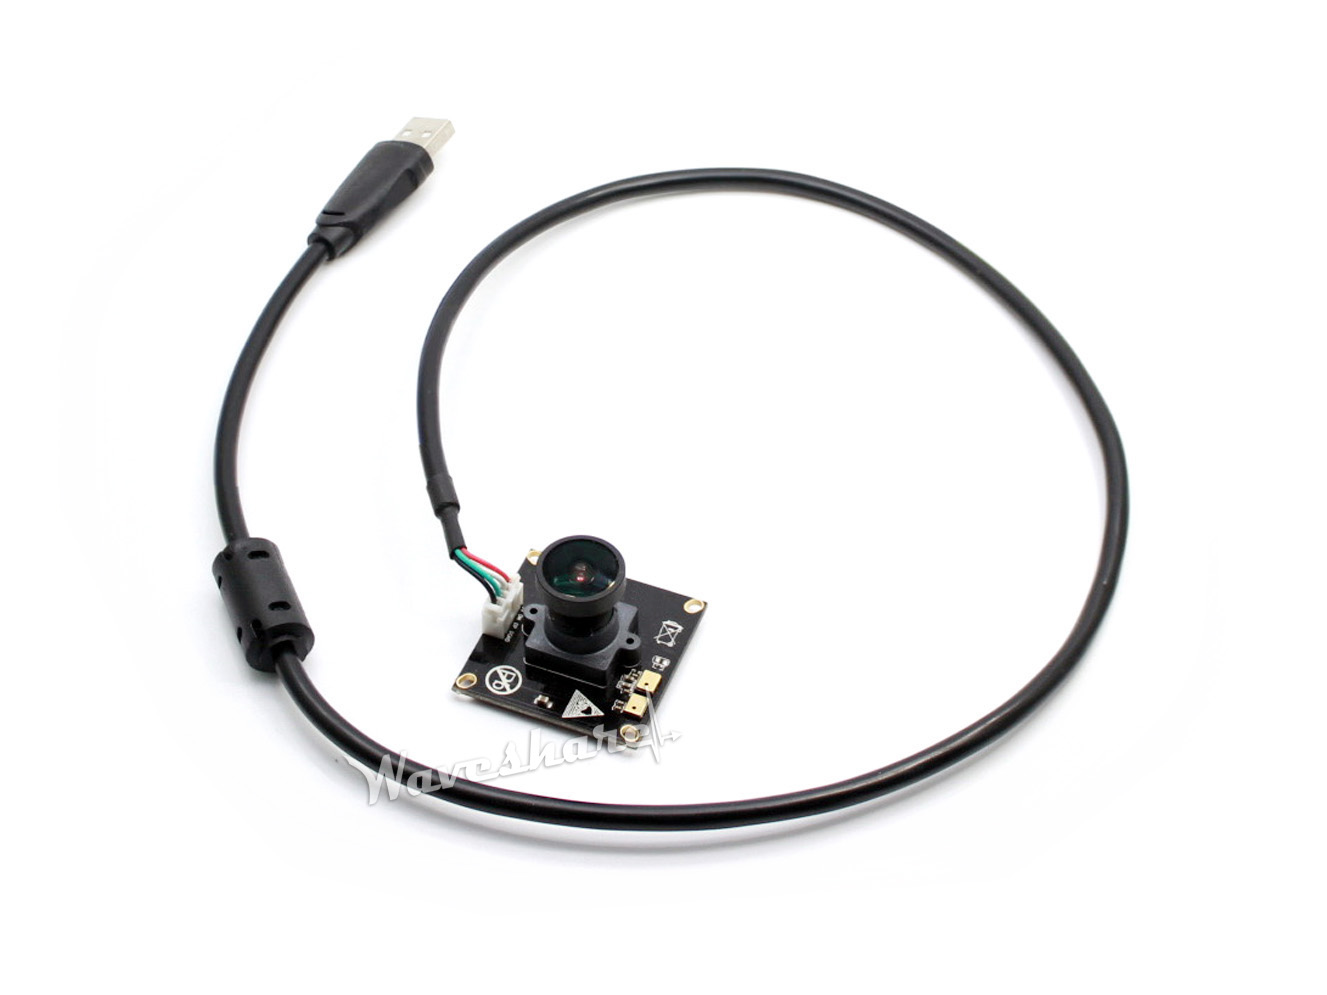 IMX179 8MP USB Camera (A), HD, Embedded Mic